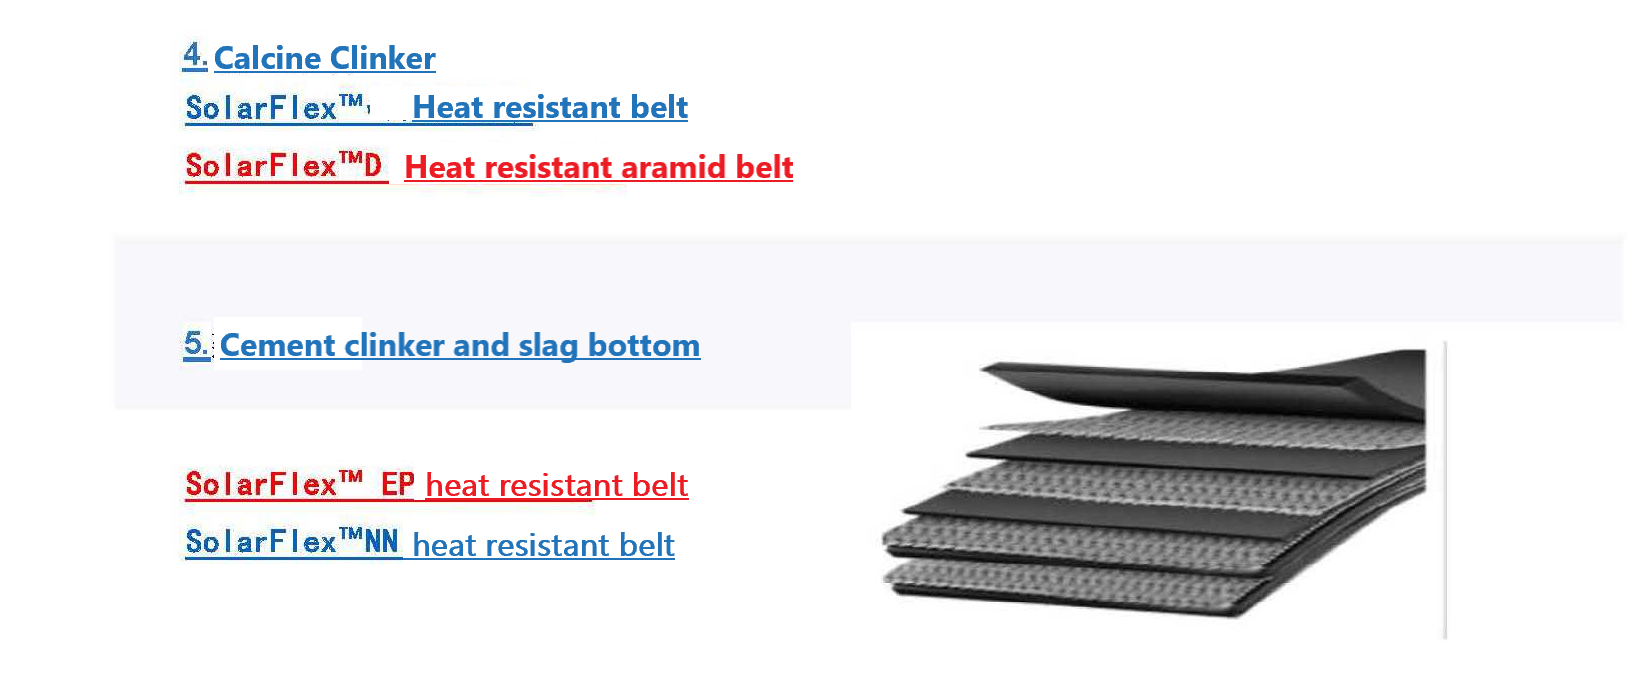 Straight Warp( SW ) Conveyor Belt